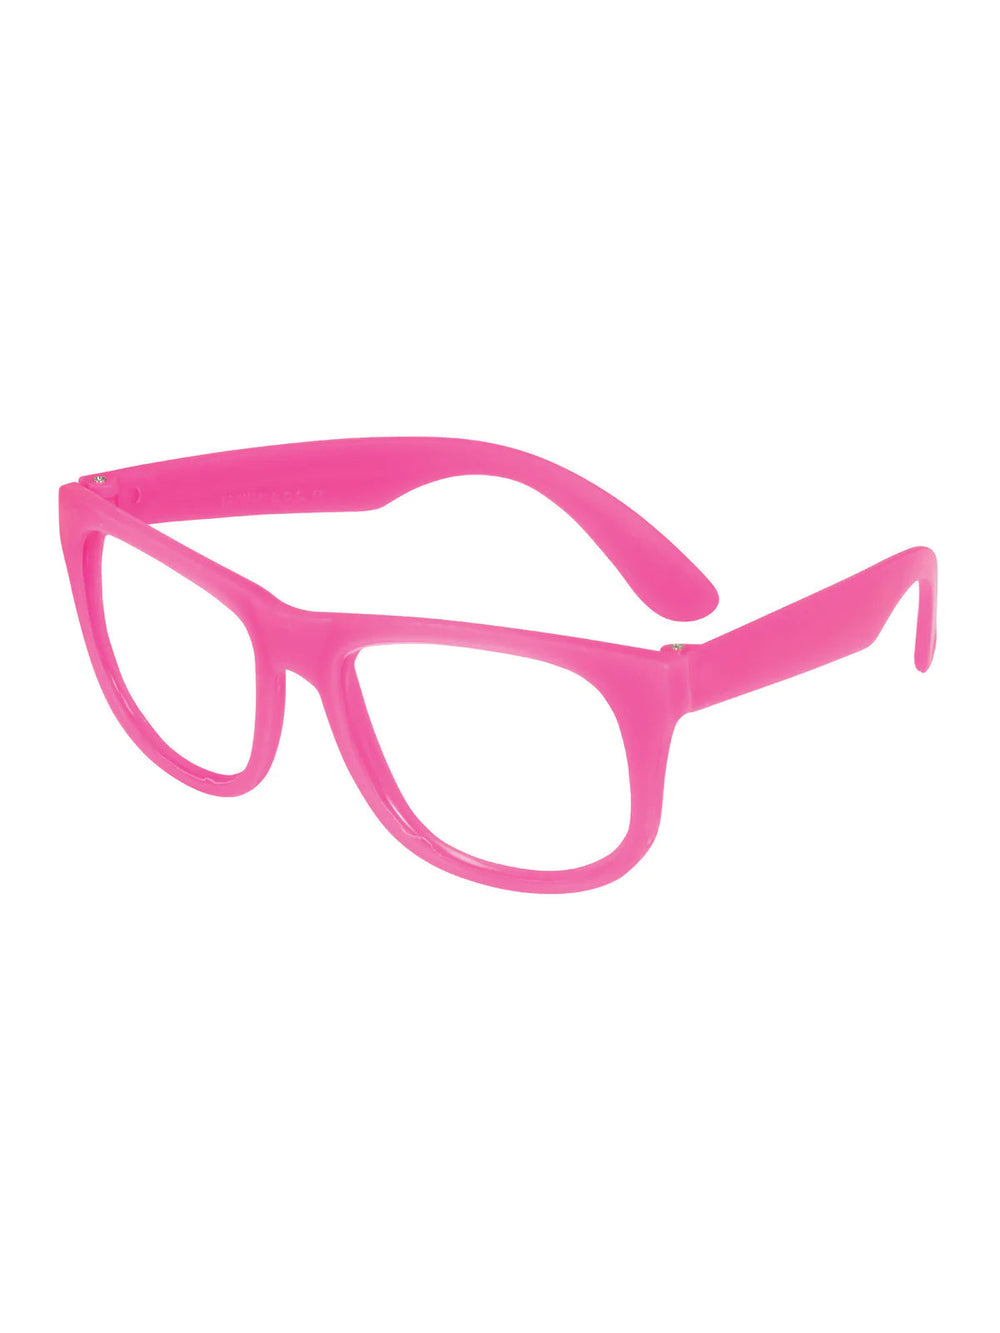 Size Chart Pink Frame Glasses Joke Costume Accessory